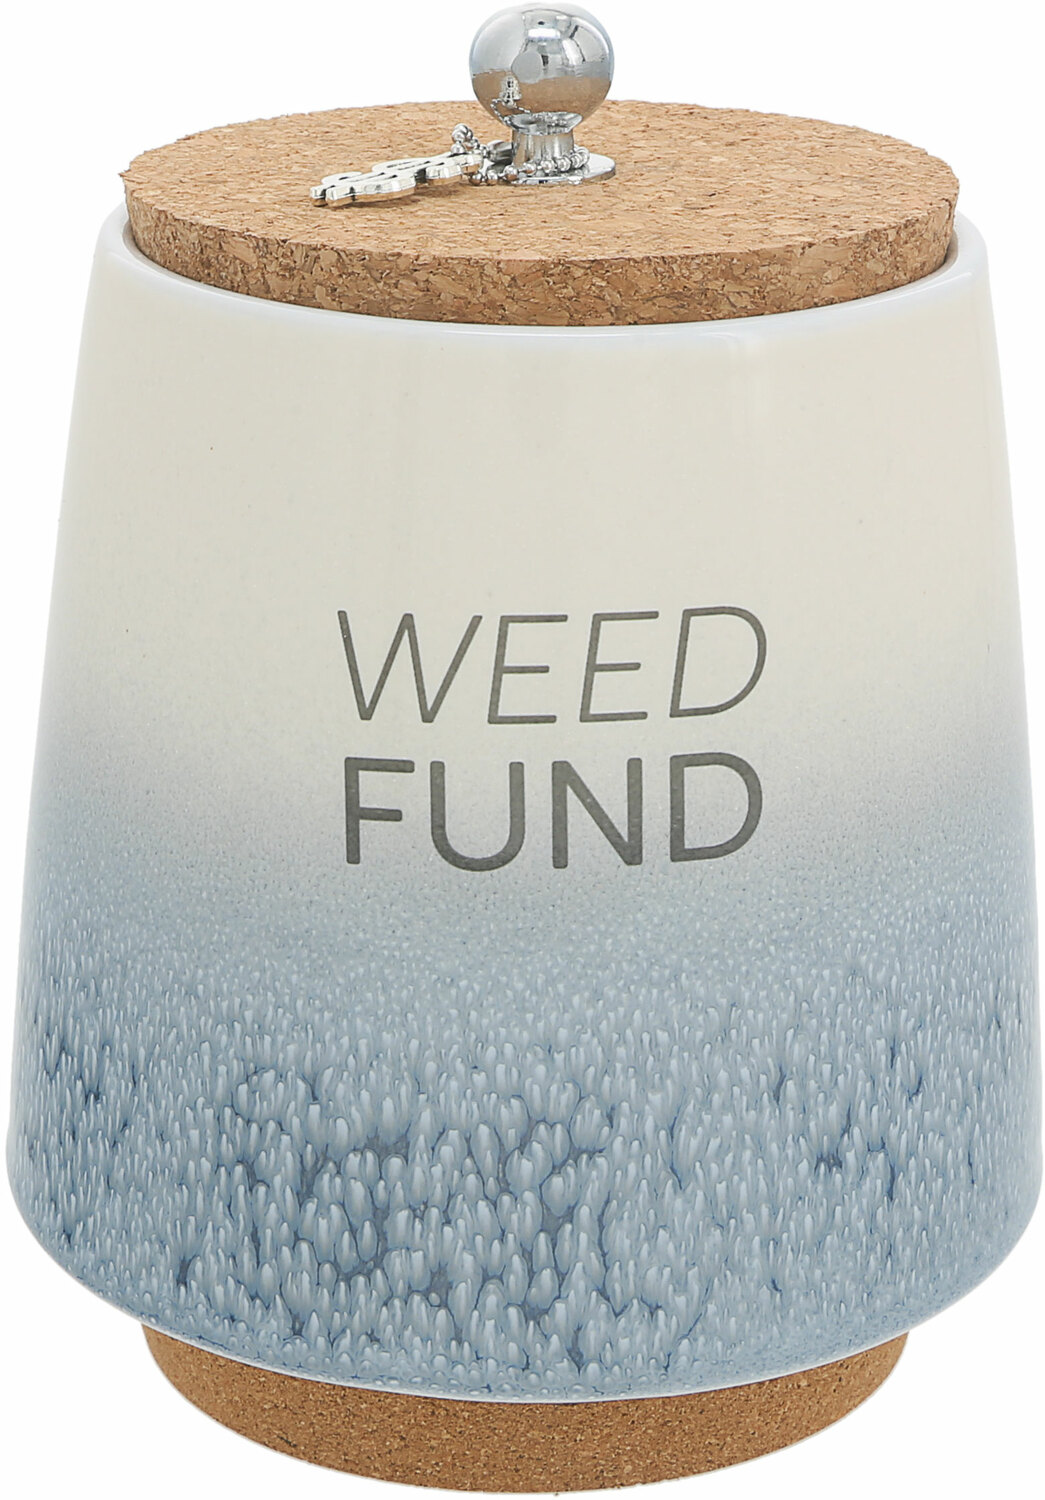 Weed by So Much Fun-d - Weed - 6.5" Ceramic Savings Bank